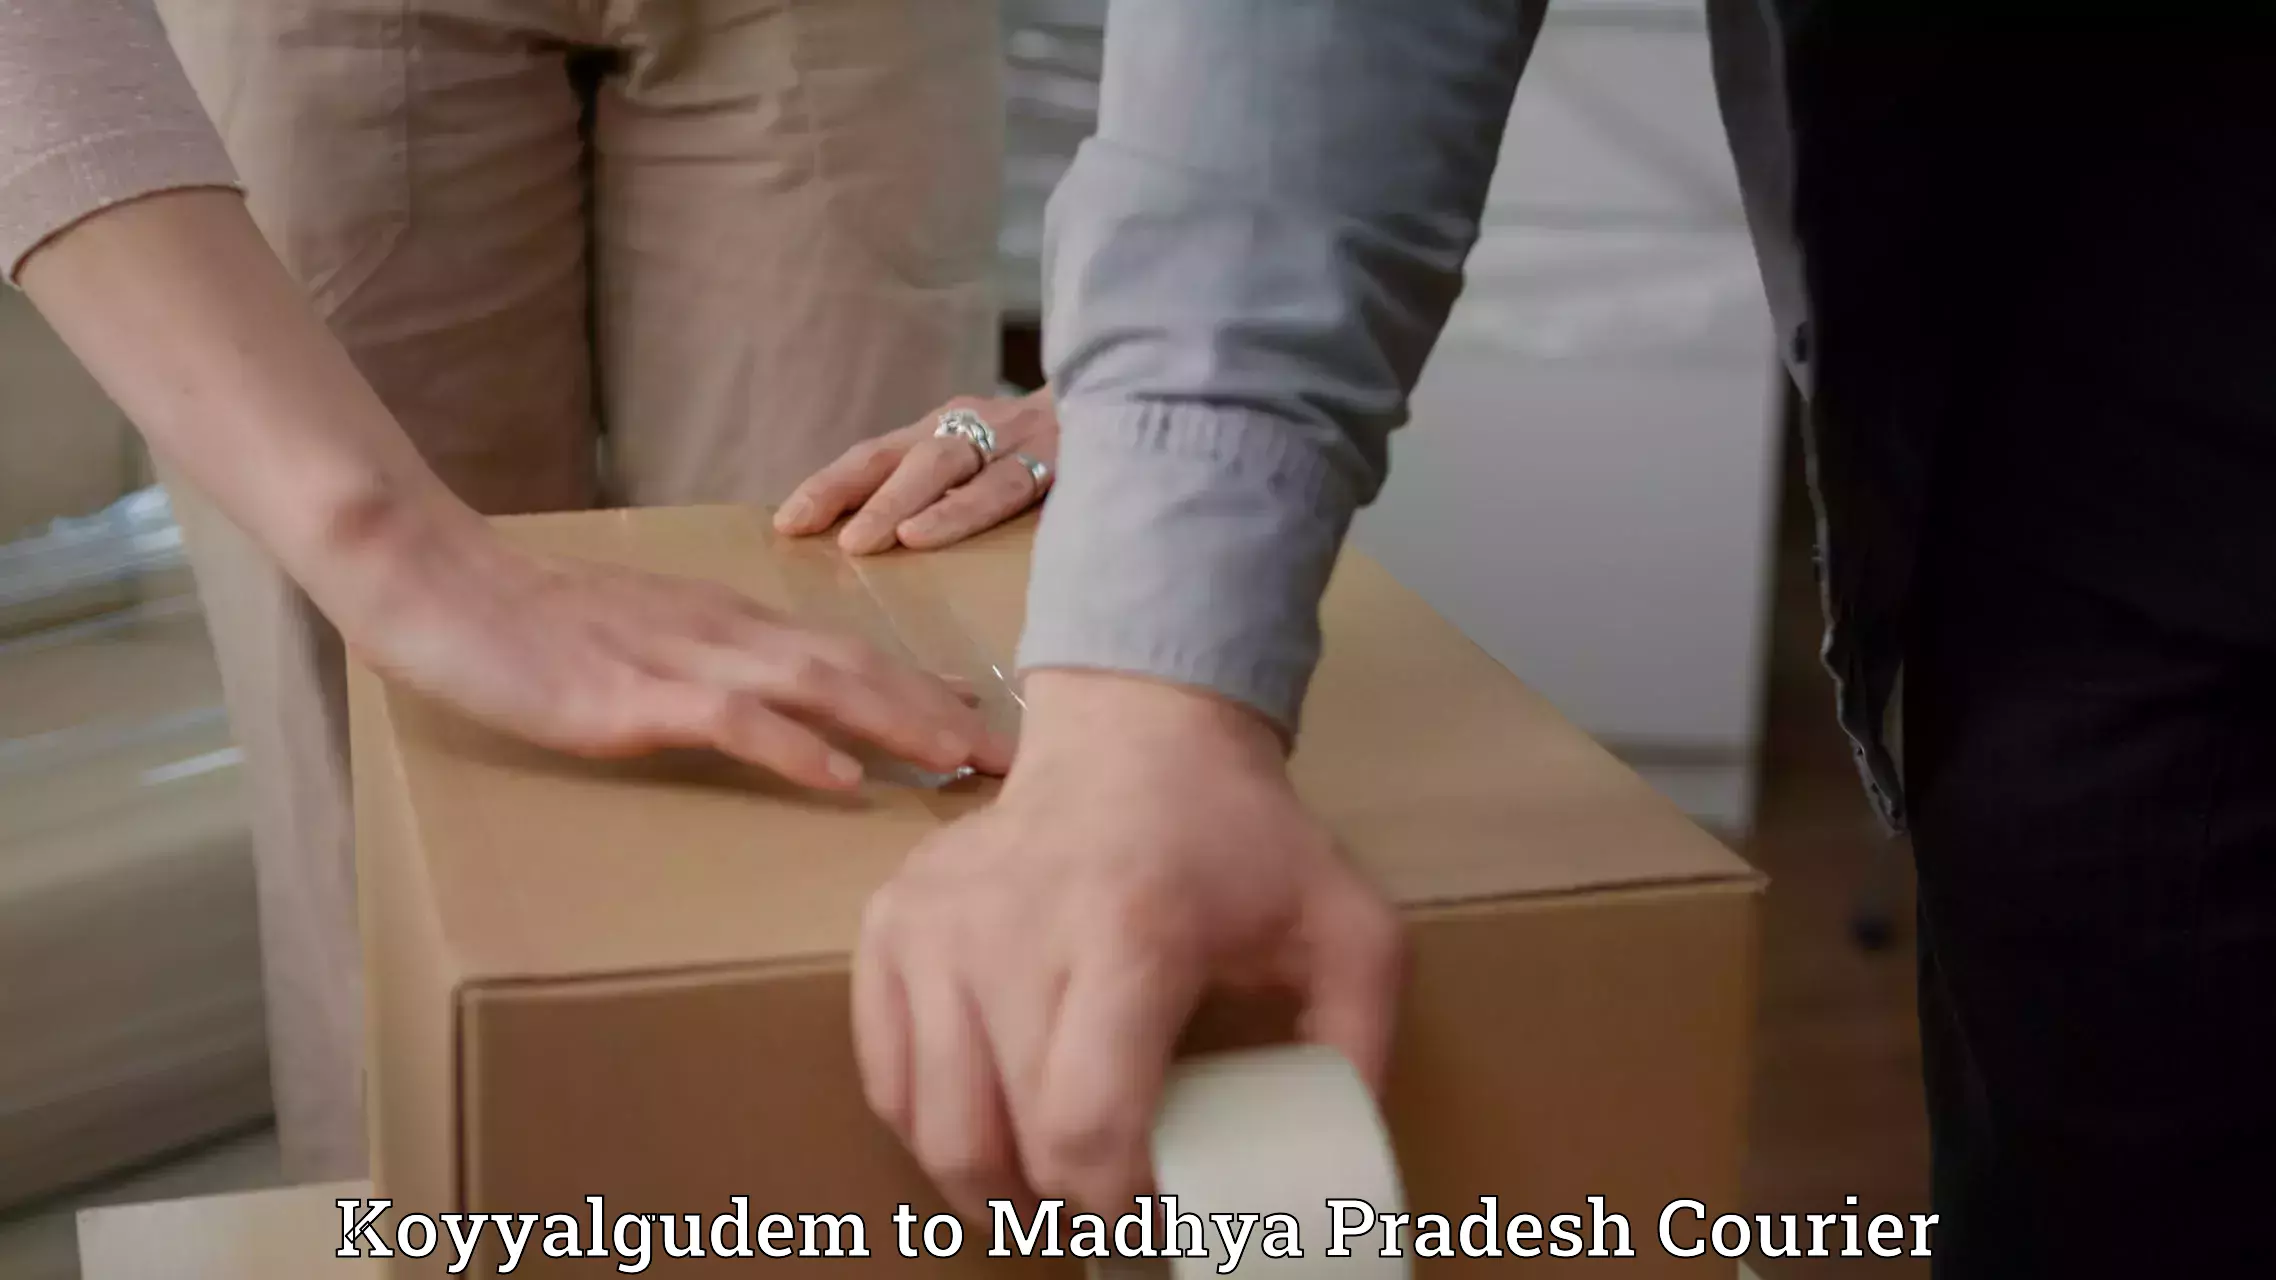 Shipping and handling Koyyalgudem to Indore